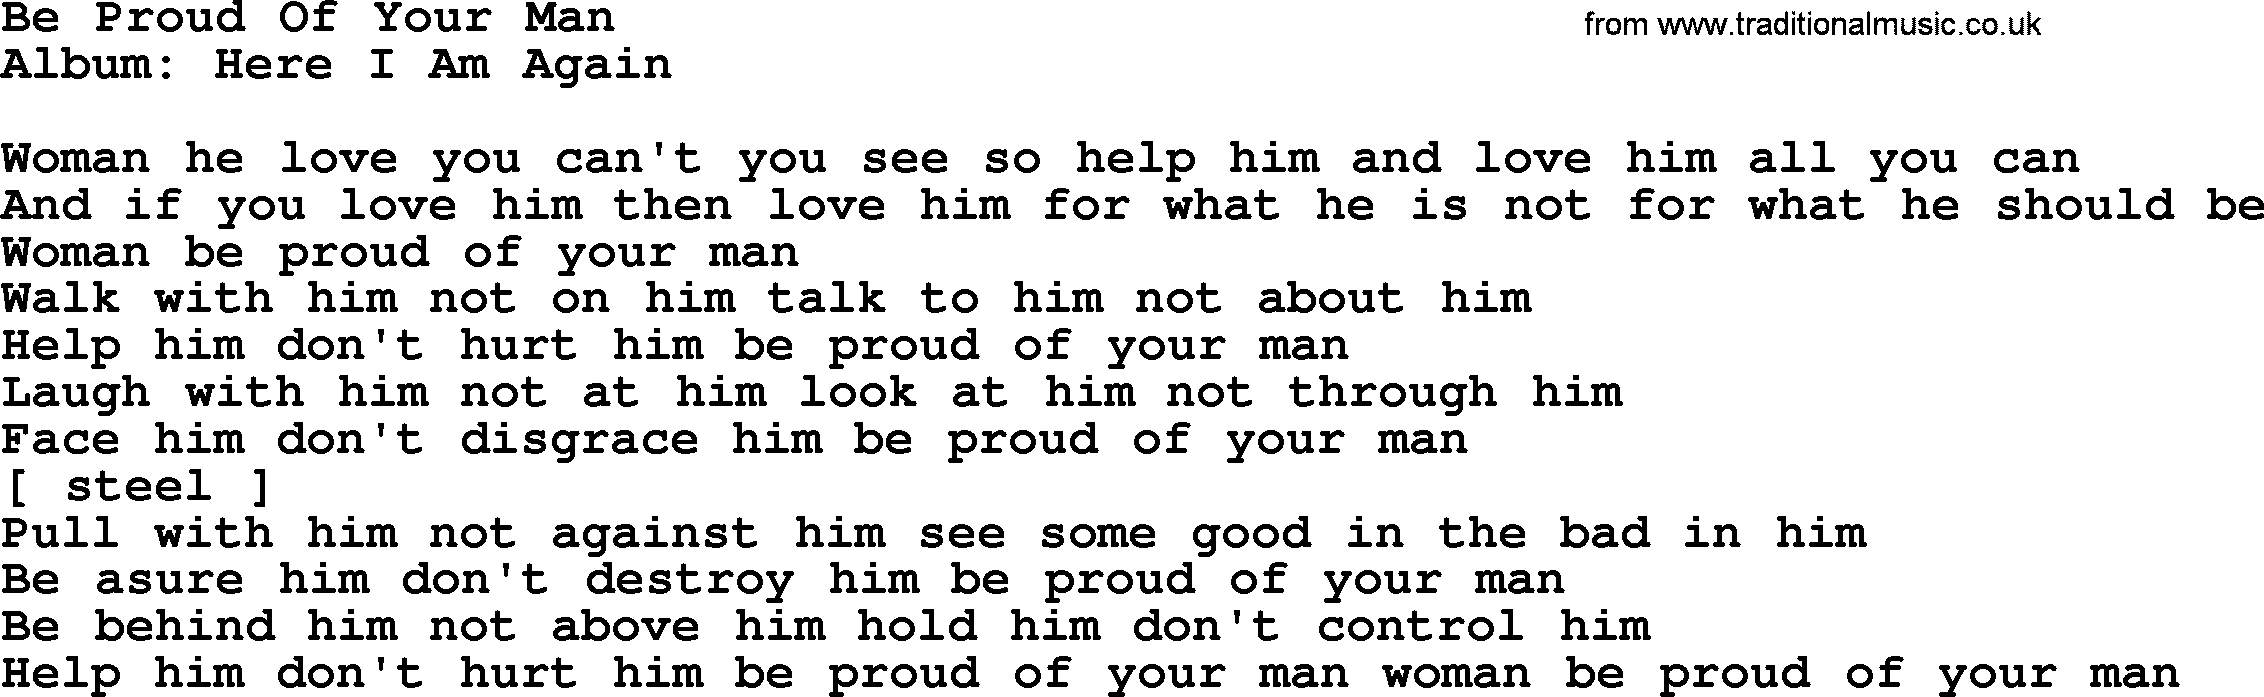 Loretta Lynn song: Be Proud Of Your Man lyrics